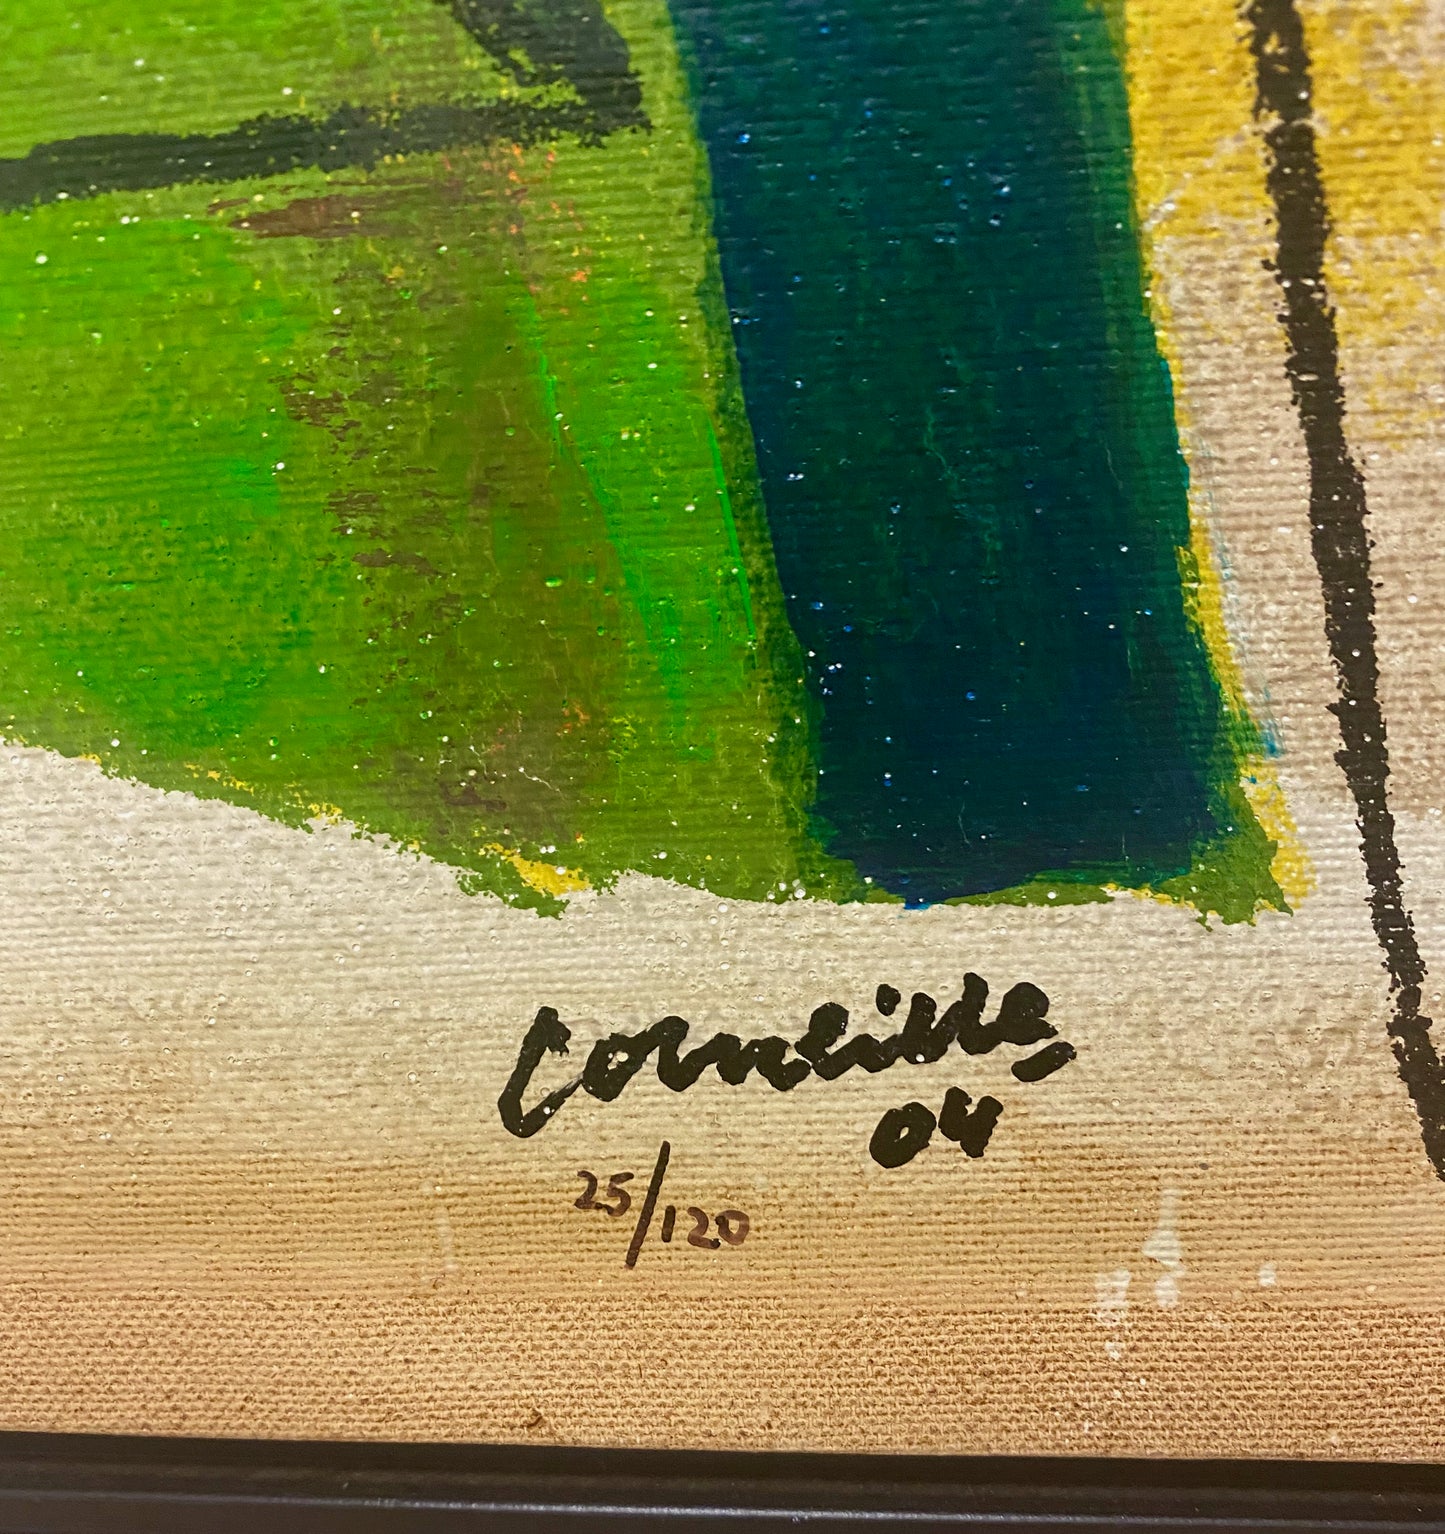 Beverloo Corneille - Plage Animée, terragraph on canvas